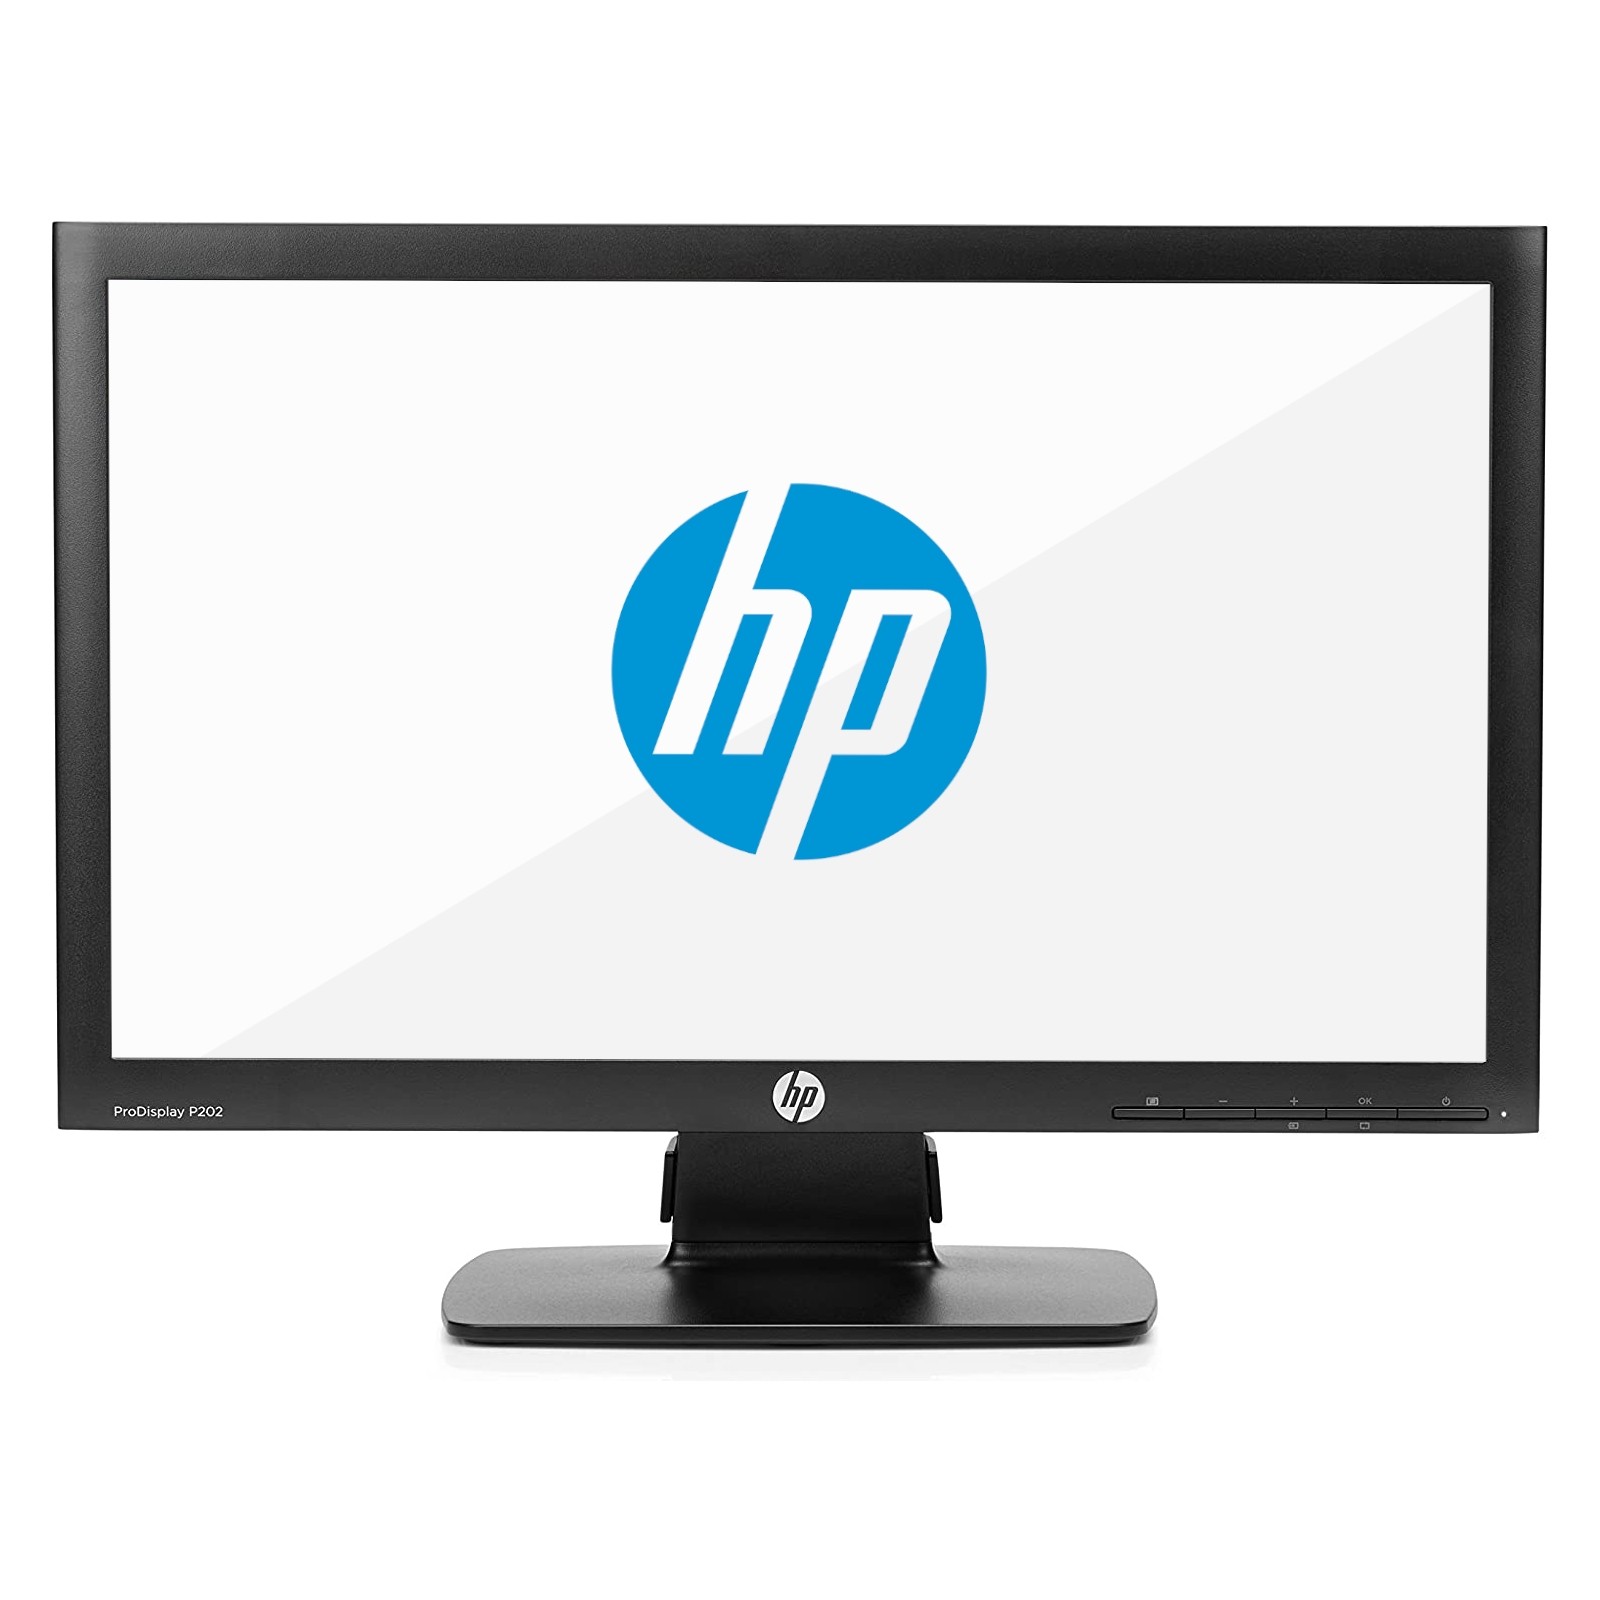 HP ProDisplay P202 20" HD+ (1600x900) TN LED Monitor Front